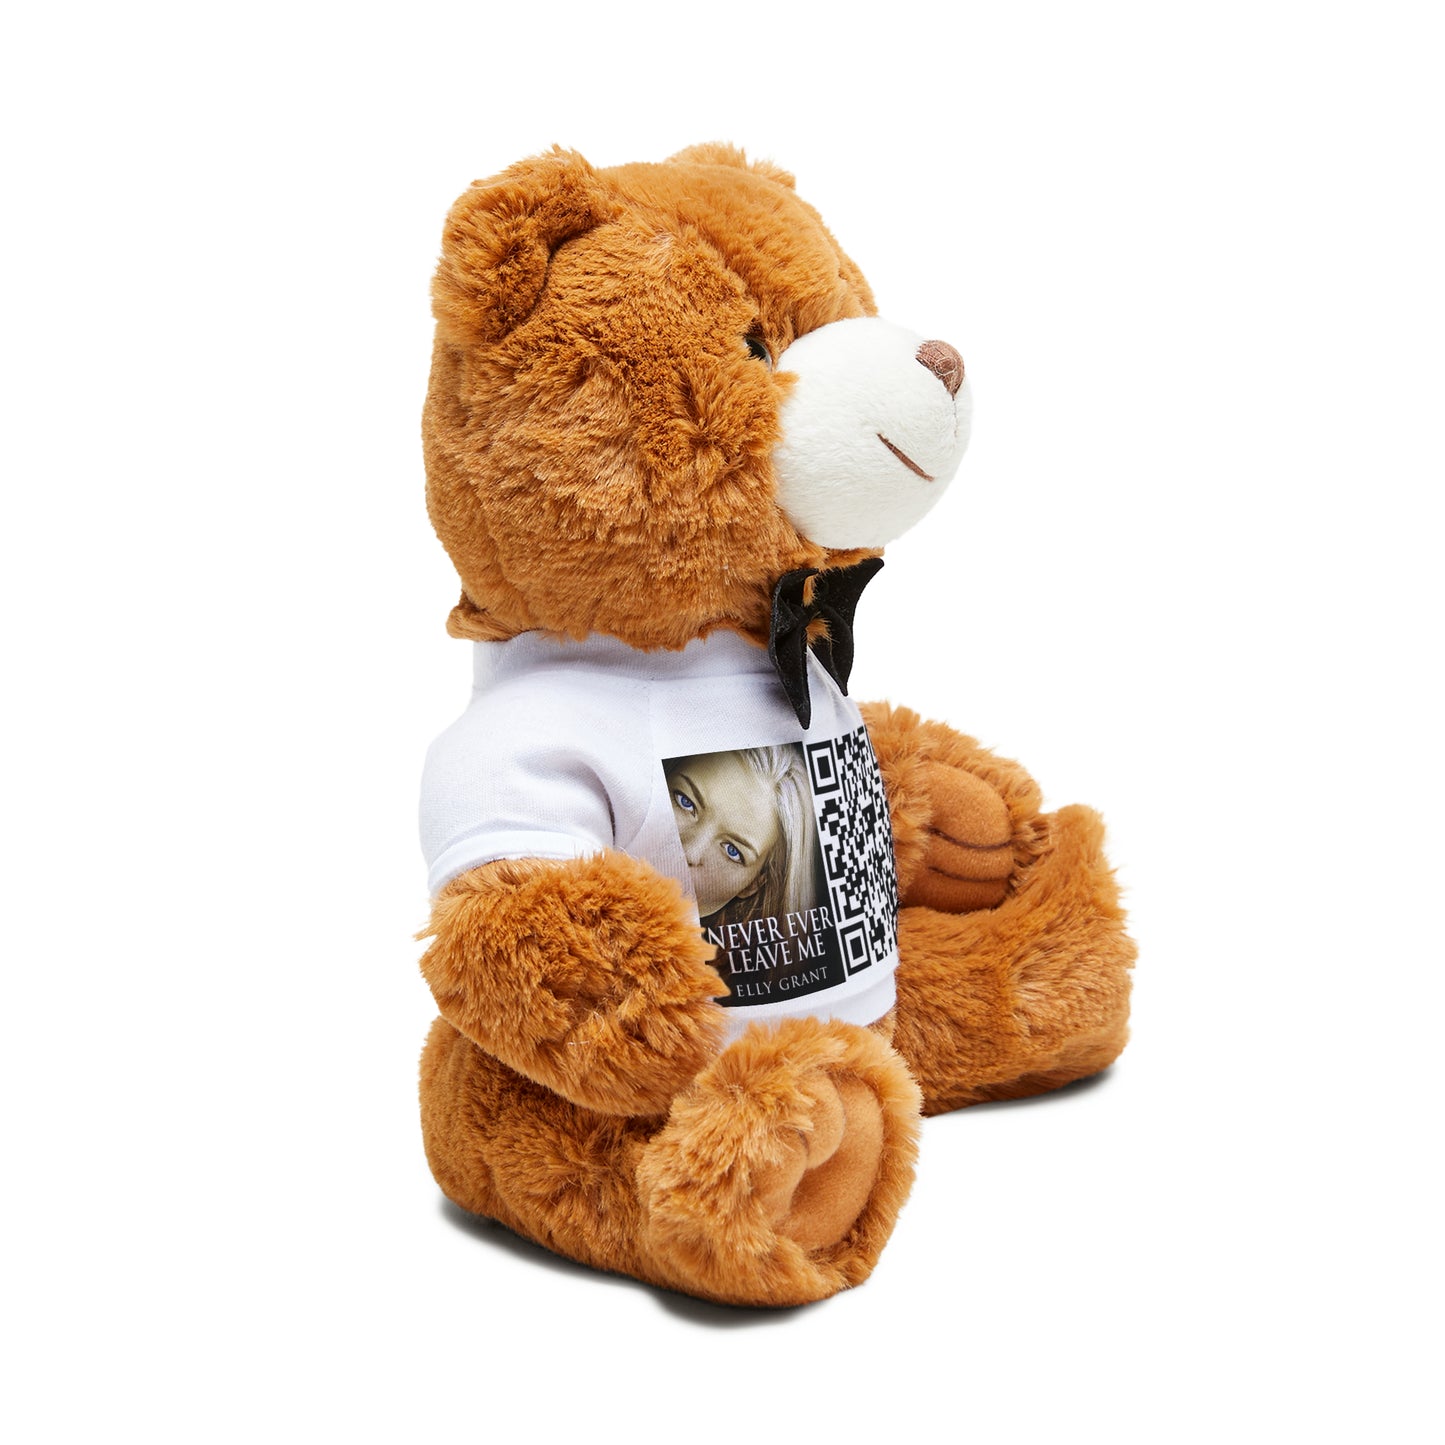 Never Ever Leave Me - Teddy Bear